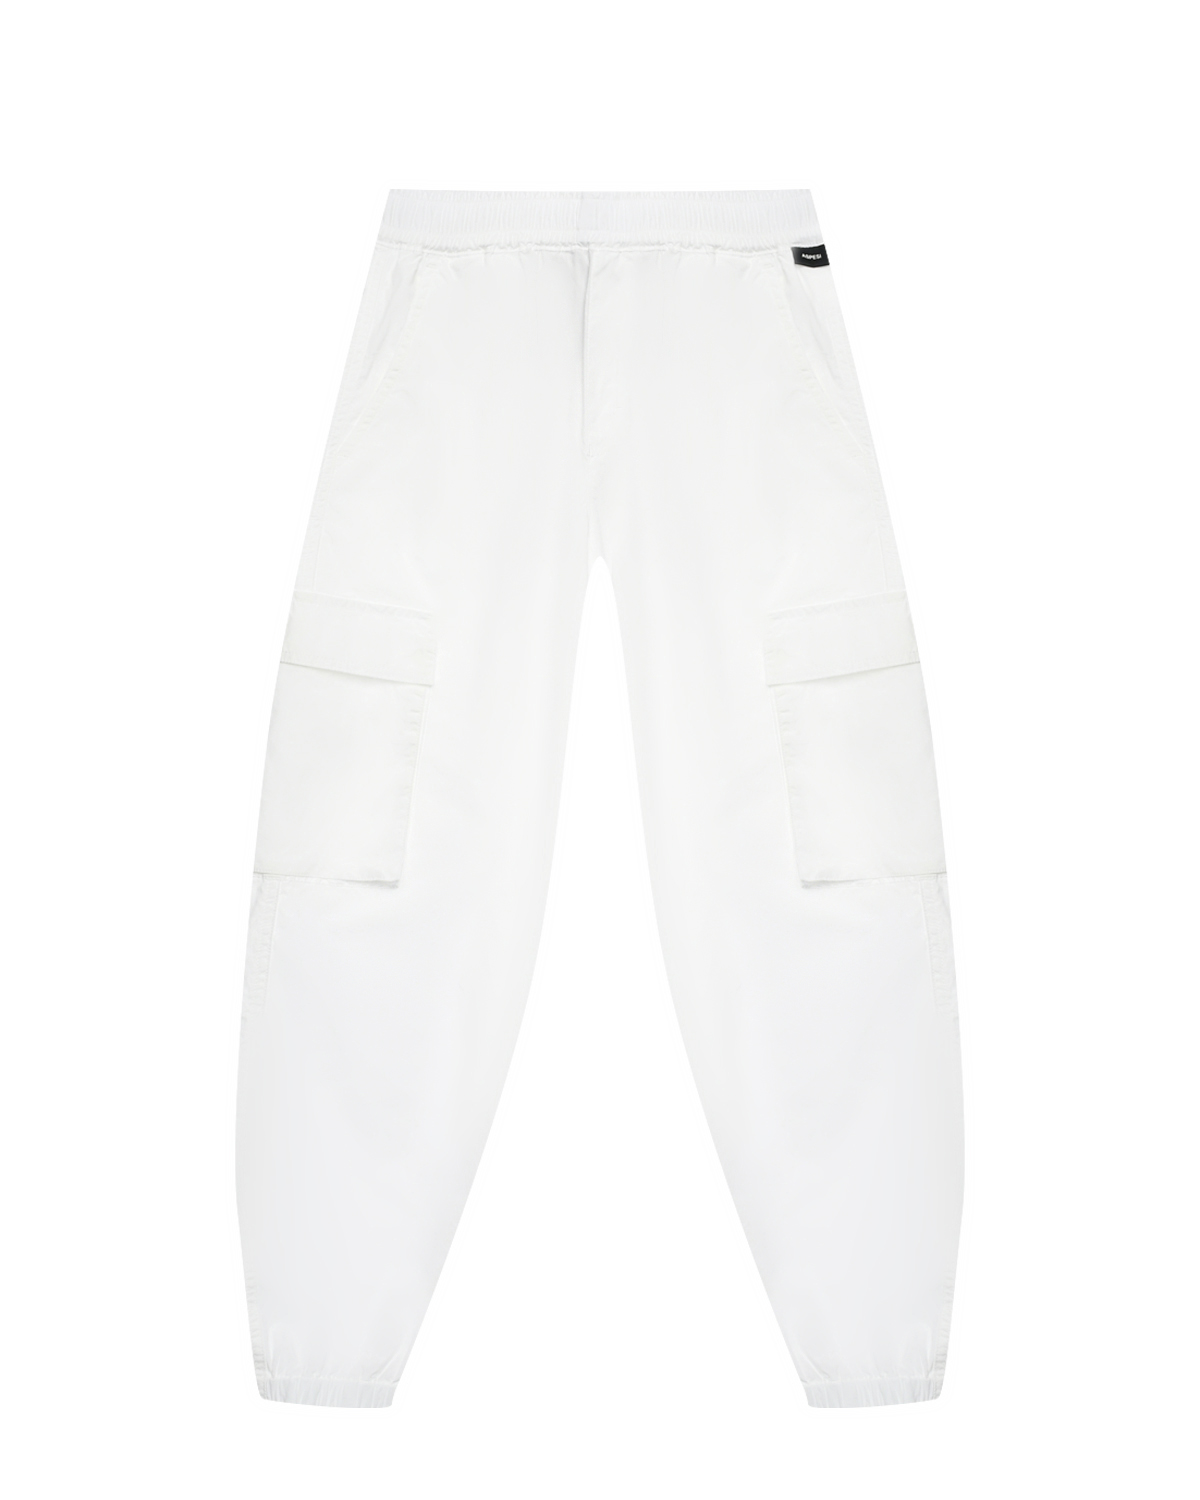 Брюки с карманами-карго, белые ASPESI, размер 140, цвет белый